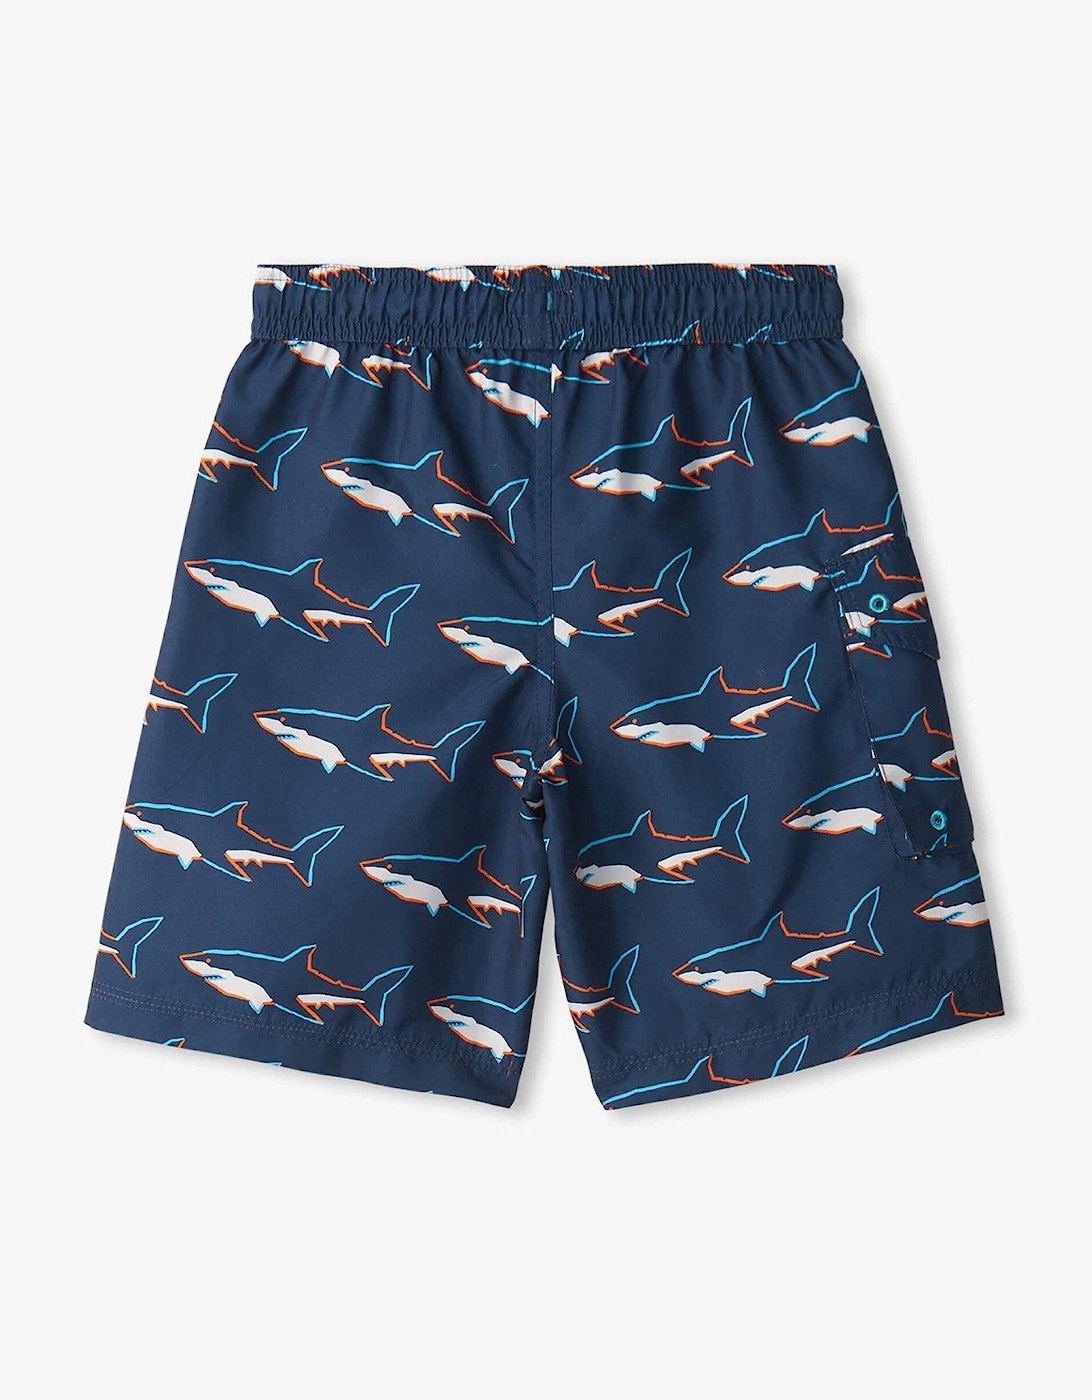 Boys Swimming Sharks Board Shorts - Medieval Blue